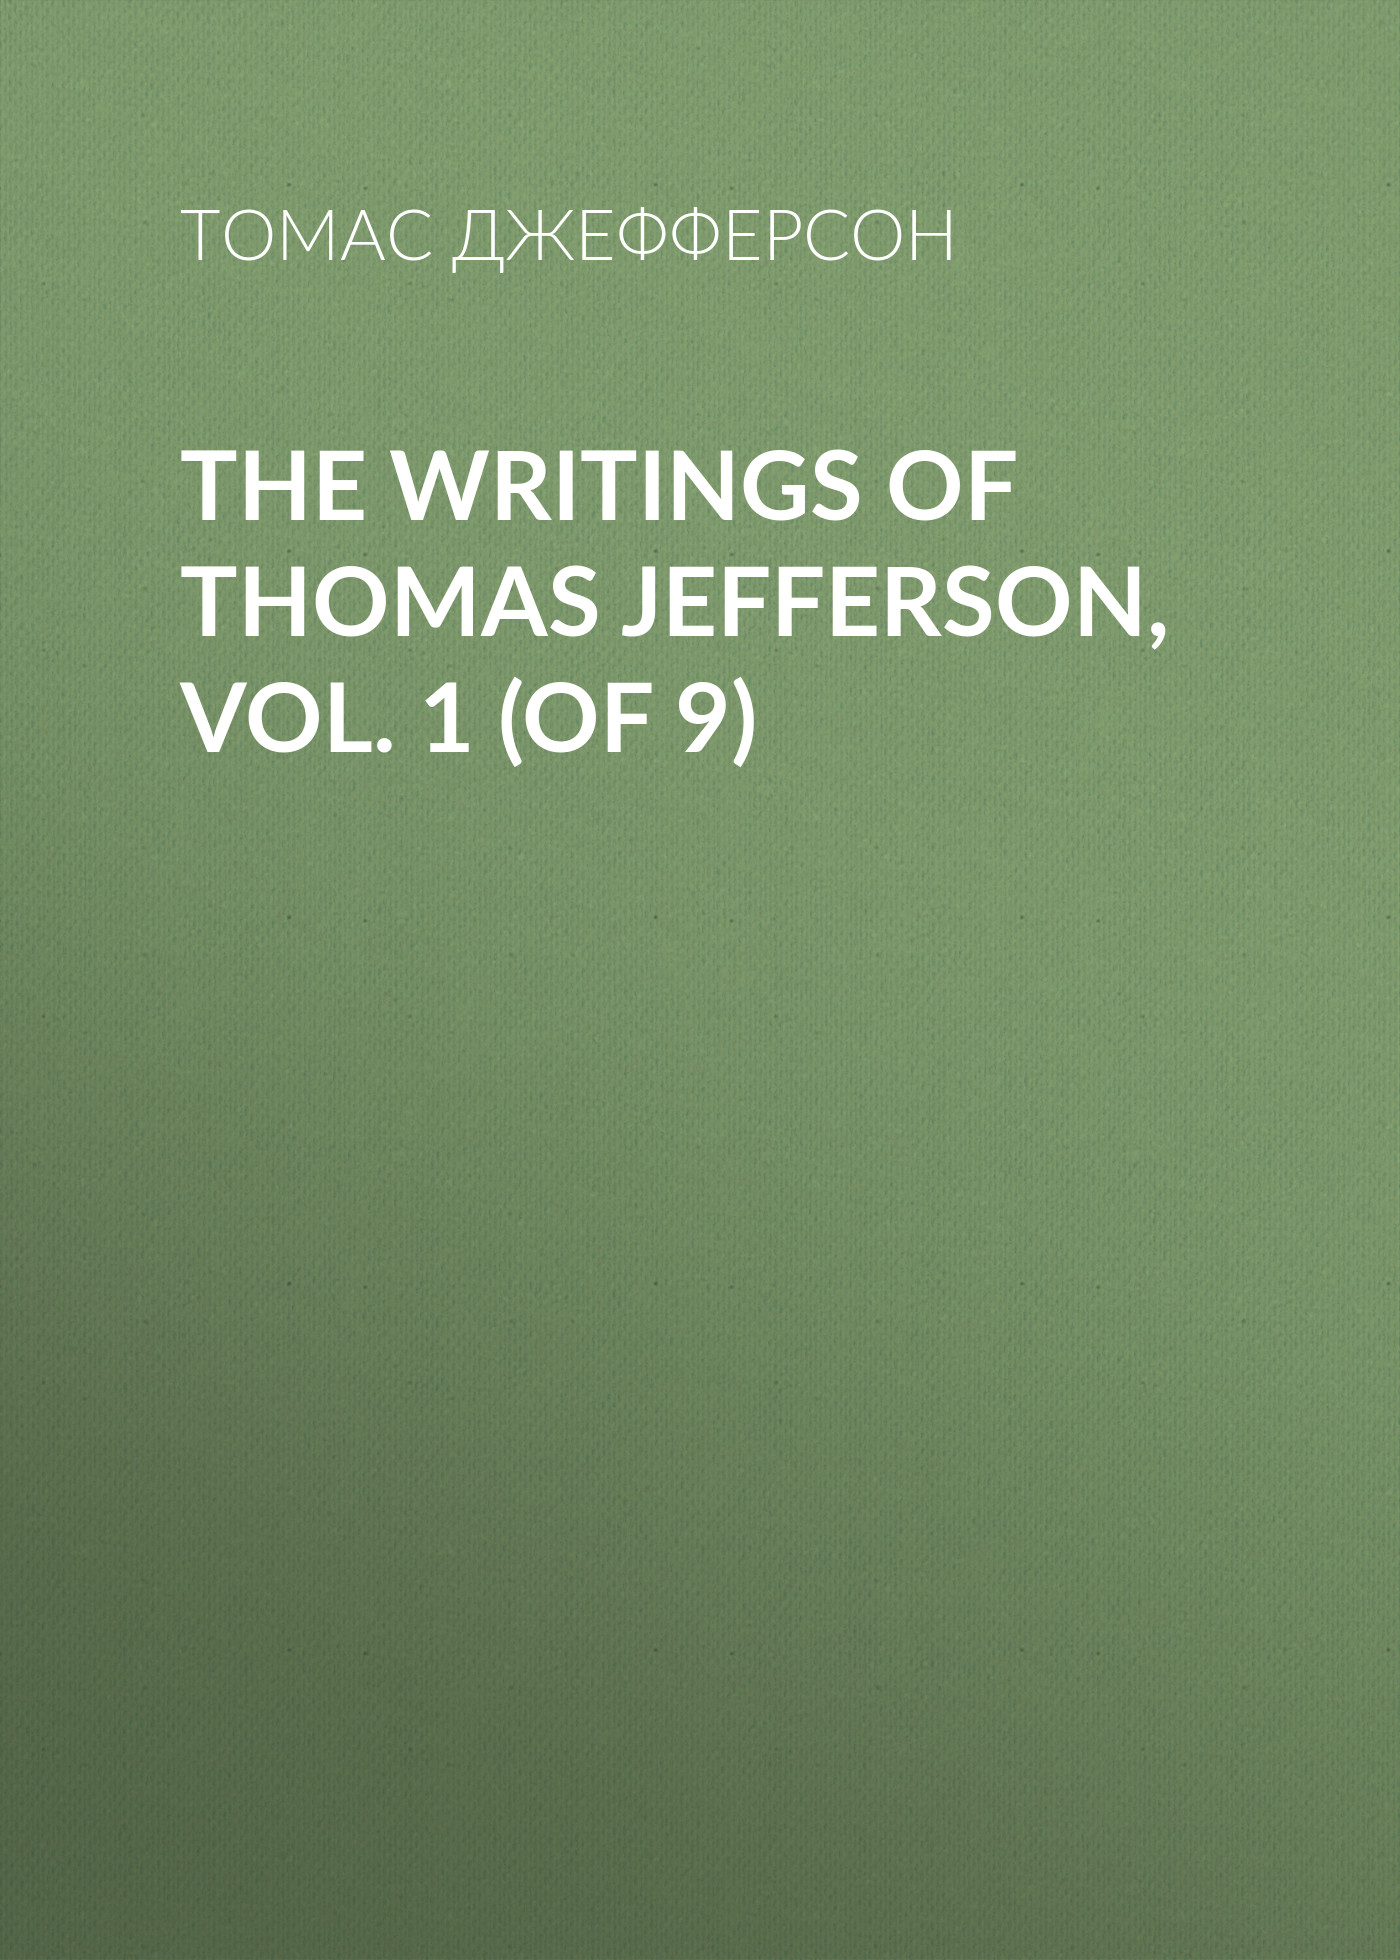 The Writings of Thomas Jefferson, Vol. 1 (of 9)